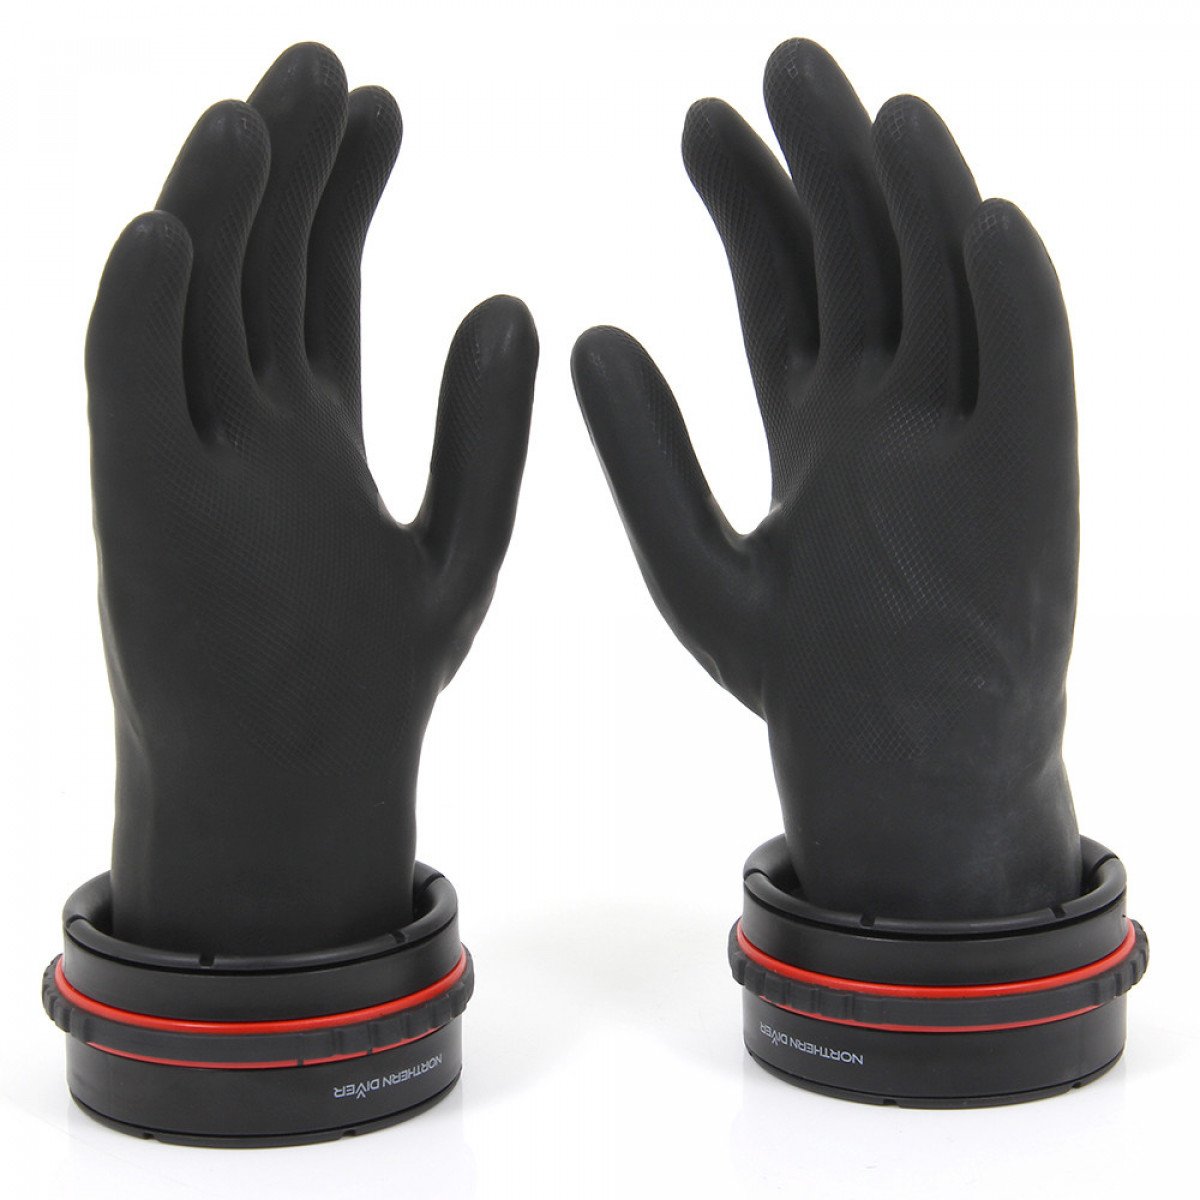 System gants étanche Ndiver Dry Glove